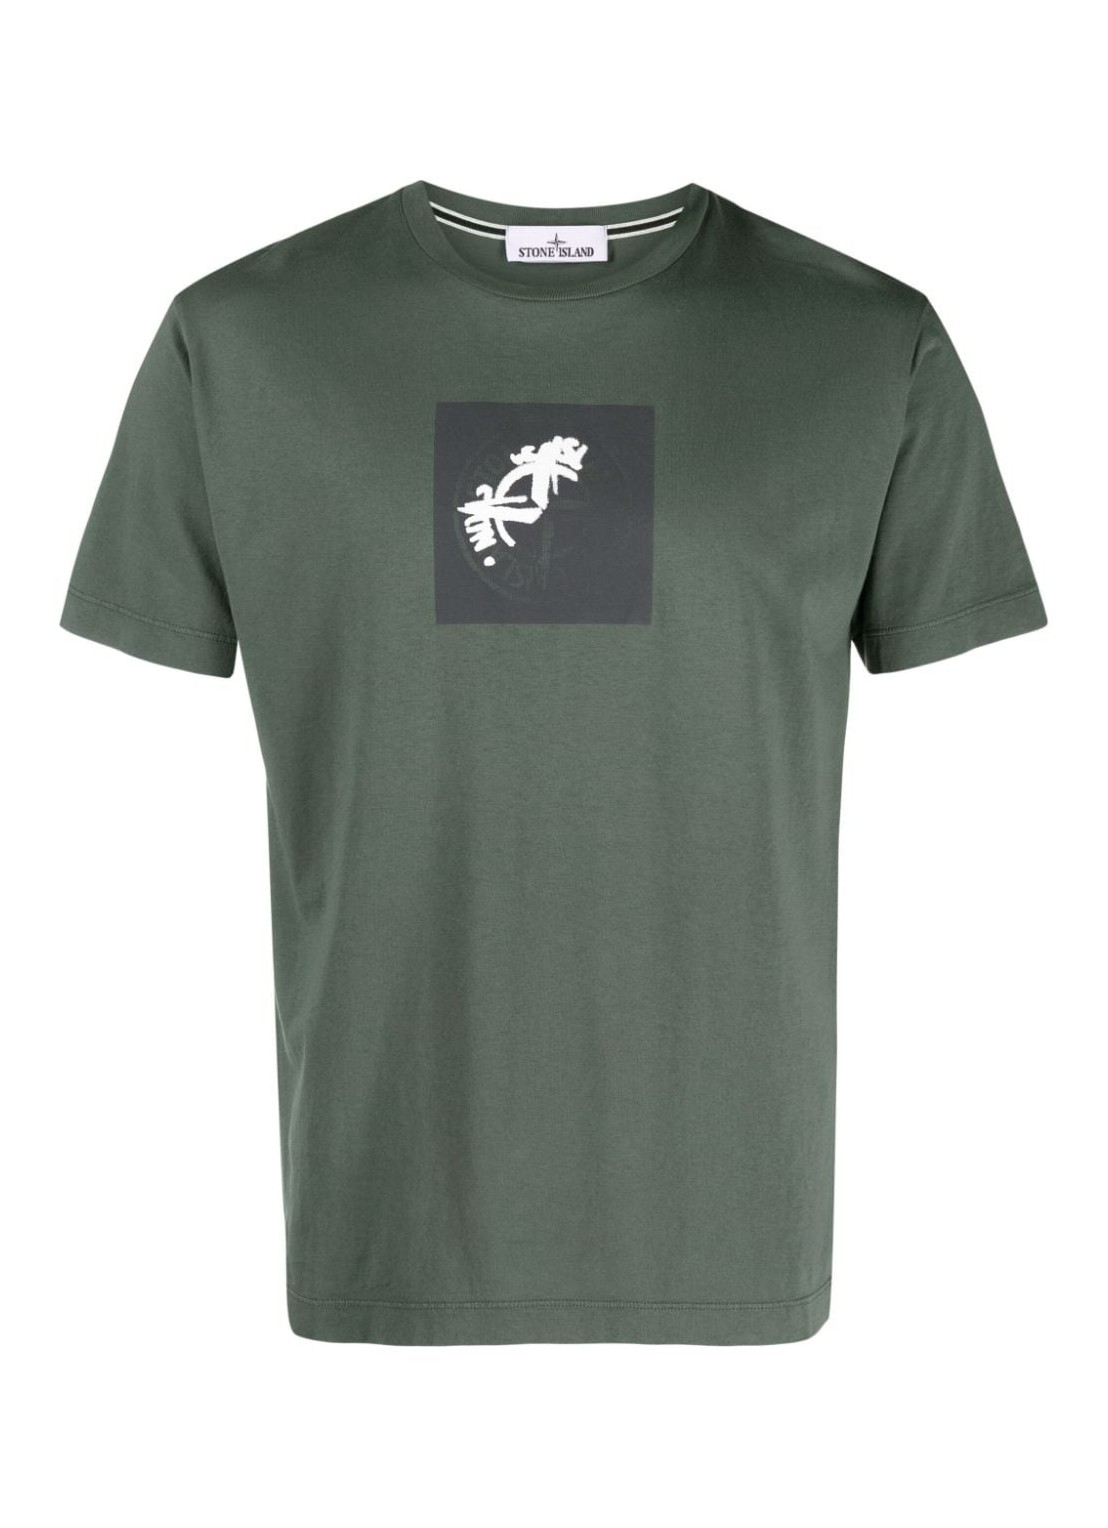 Camiseta stone island t-shirt man t shirt 80152ns83 v0059 talla M
 